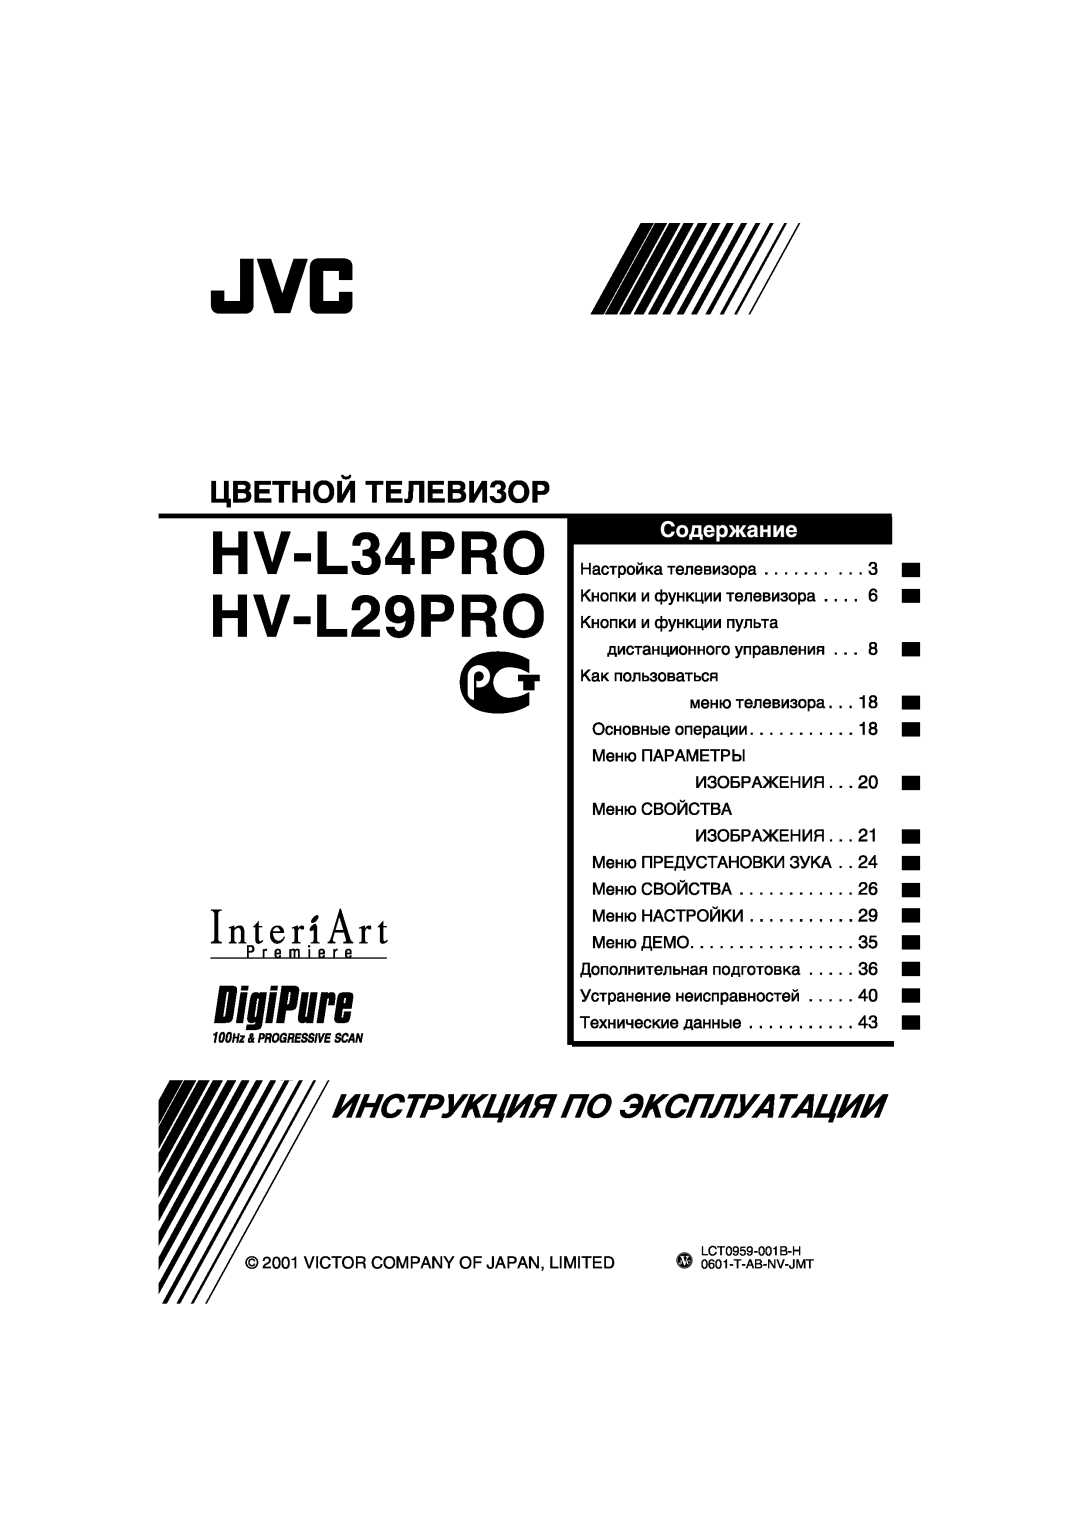 JVC HV-L29PRO, HV-L34PRO manual Victor Company Of Japan, Limited, LCT0959-001B-H 0601-T-AB-NV-JMT 